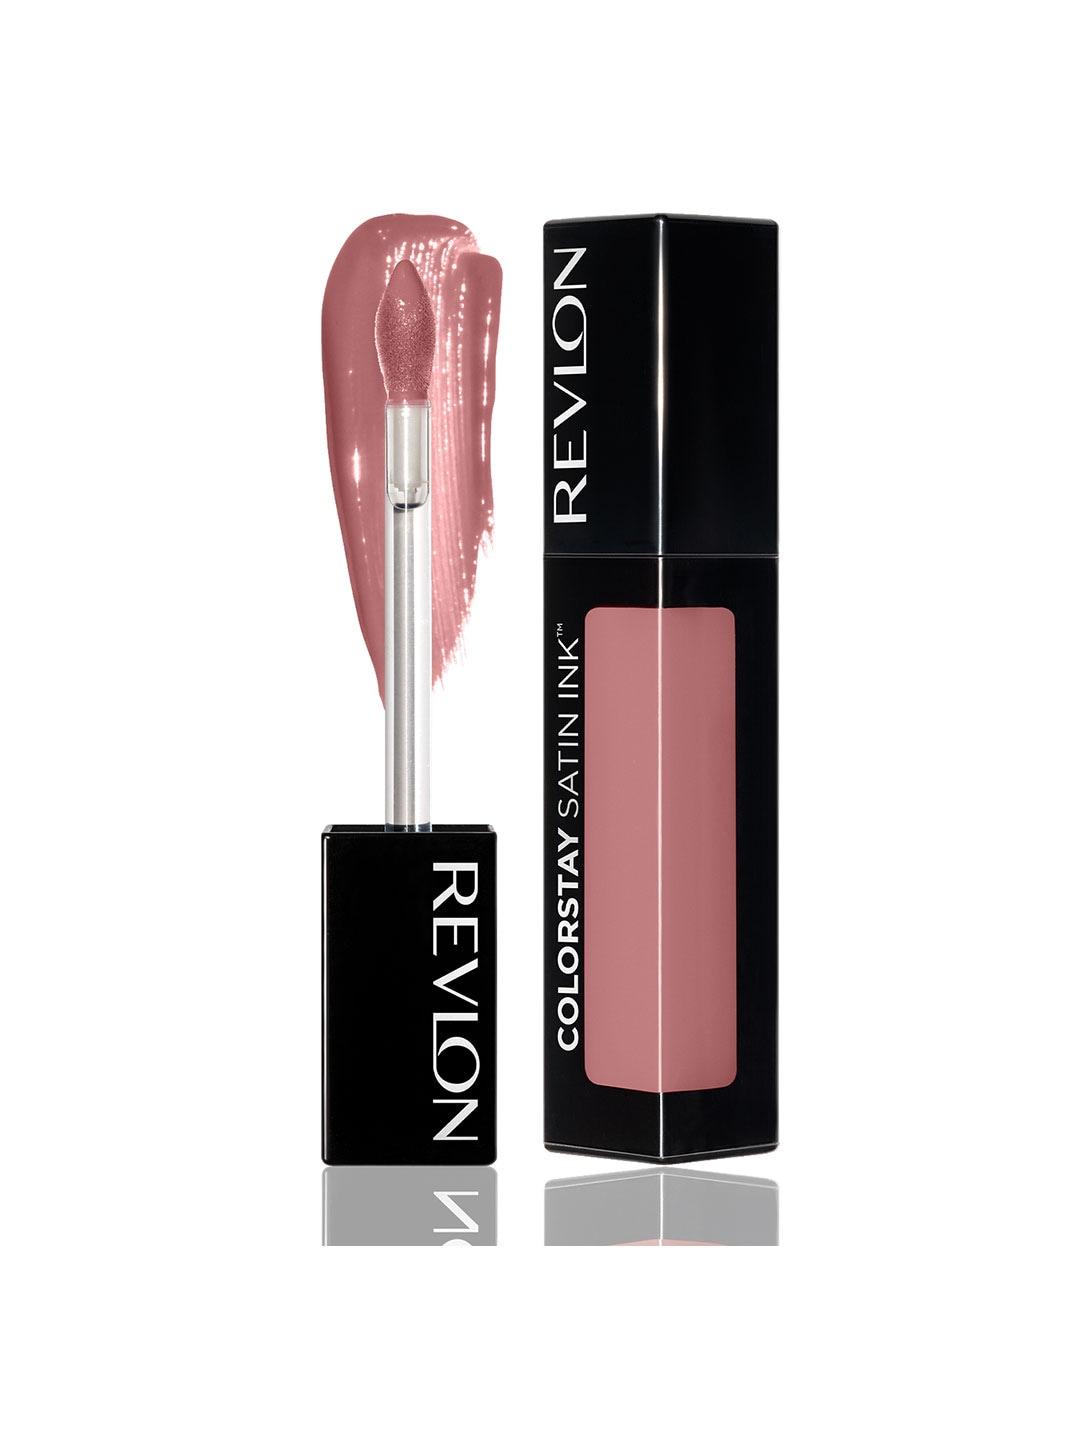 Revlon Colorstay Satin Ink Liquid Lip Color with Vitamin E 5ml - Partner In Crime 007